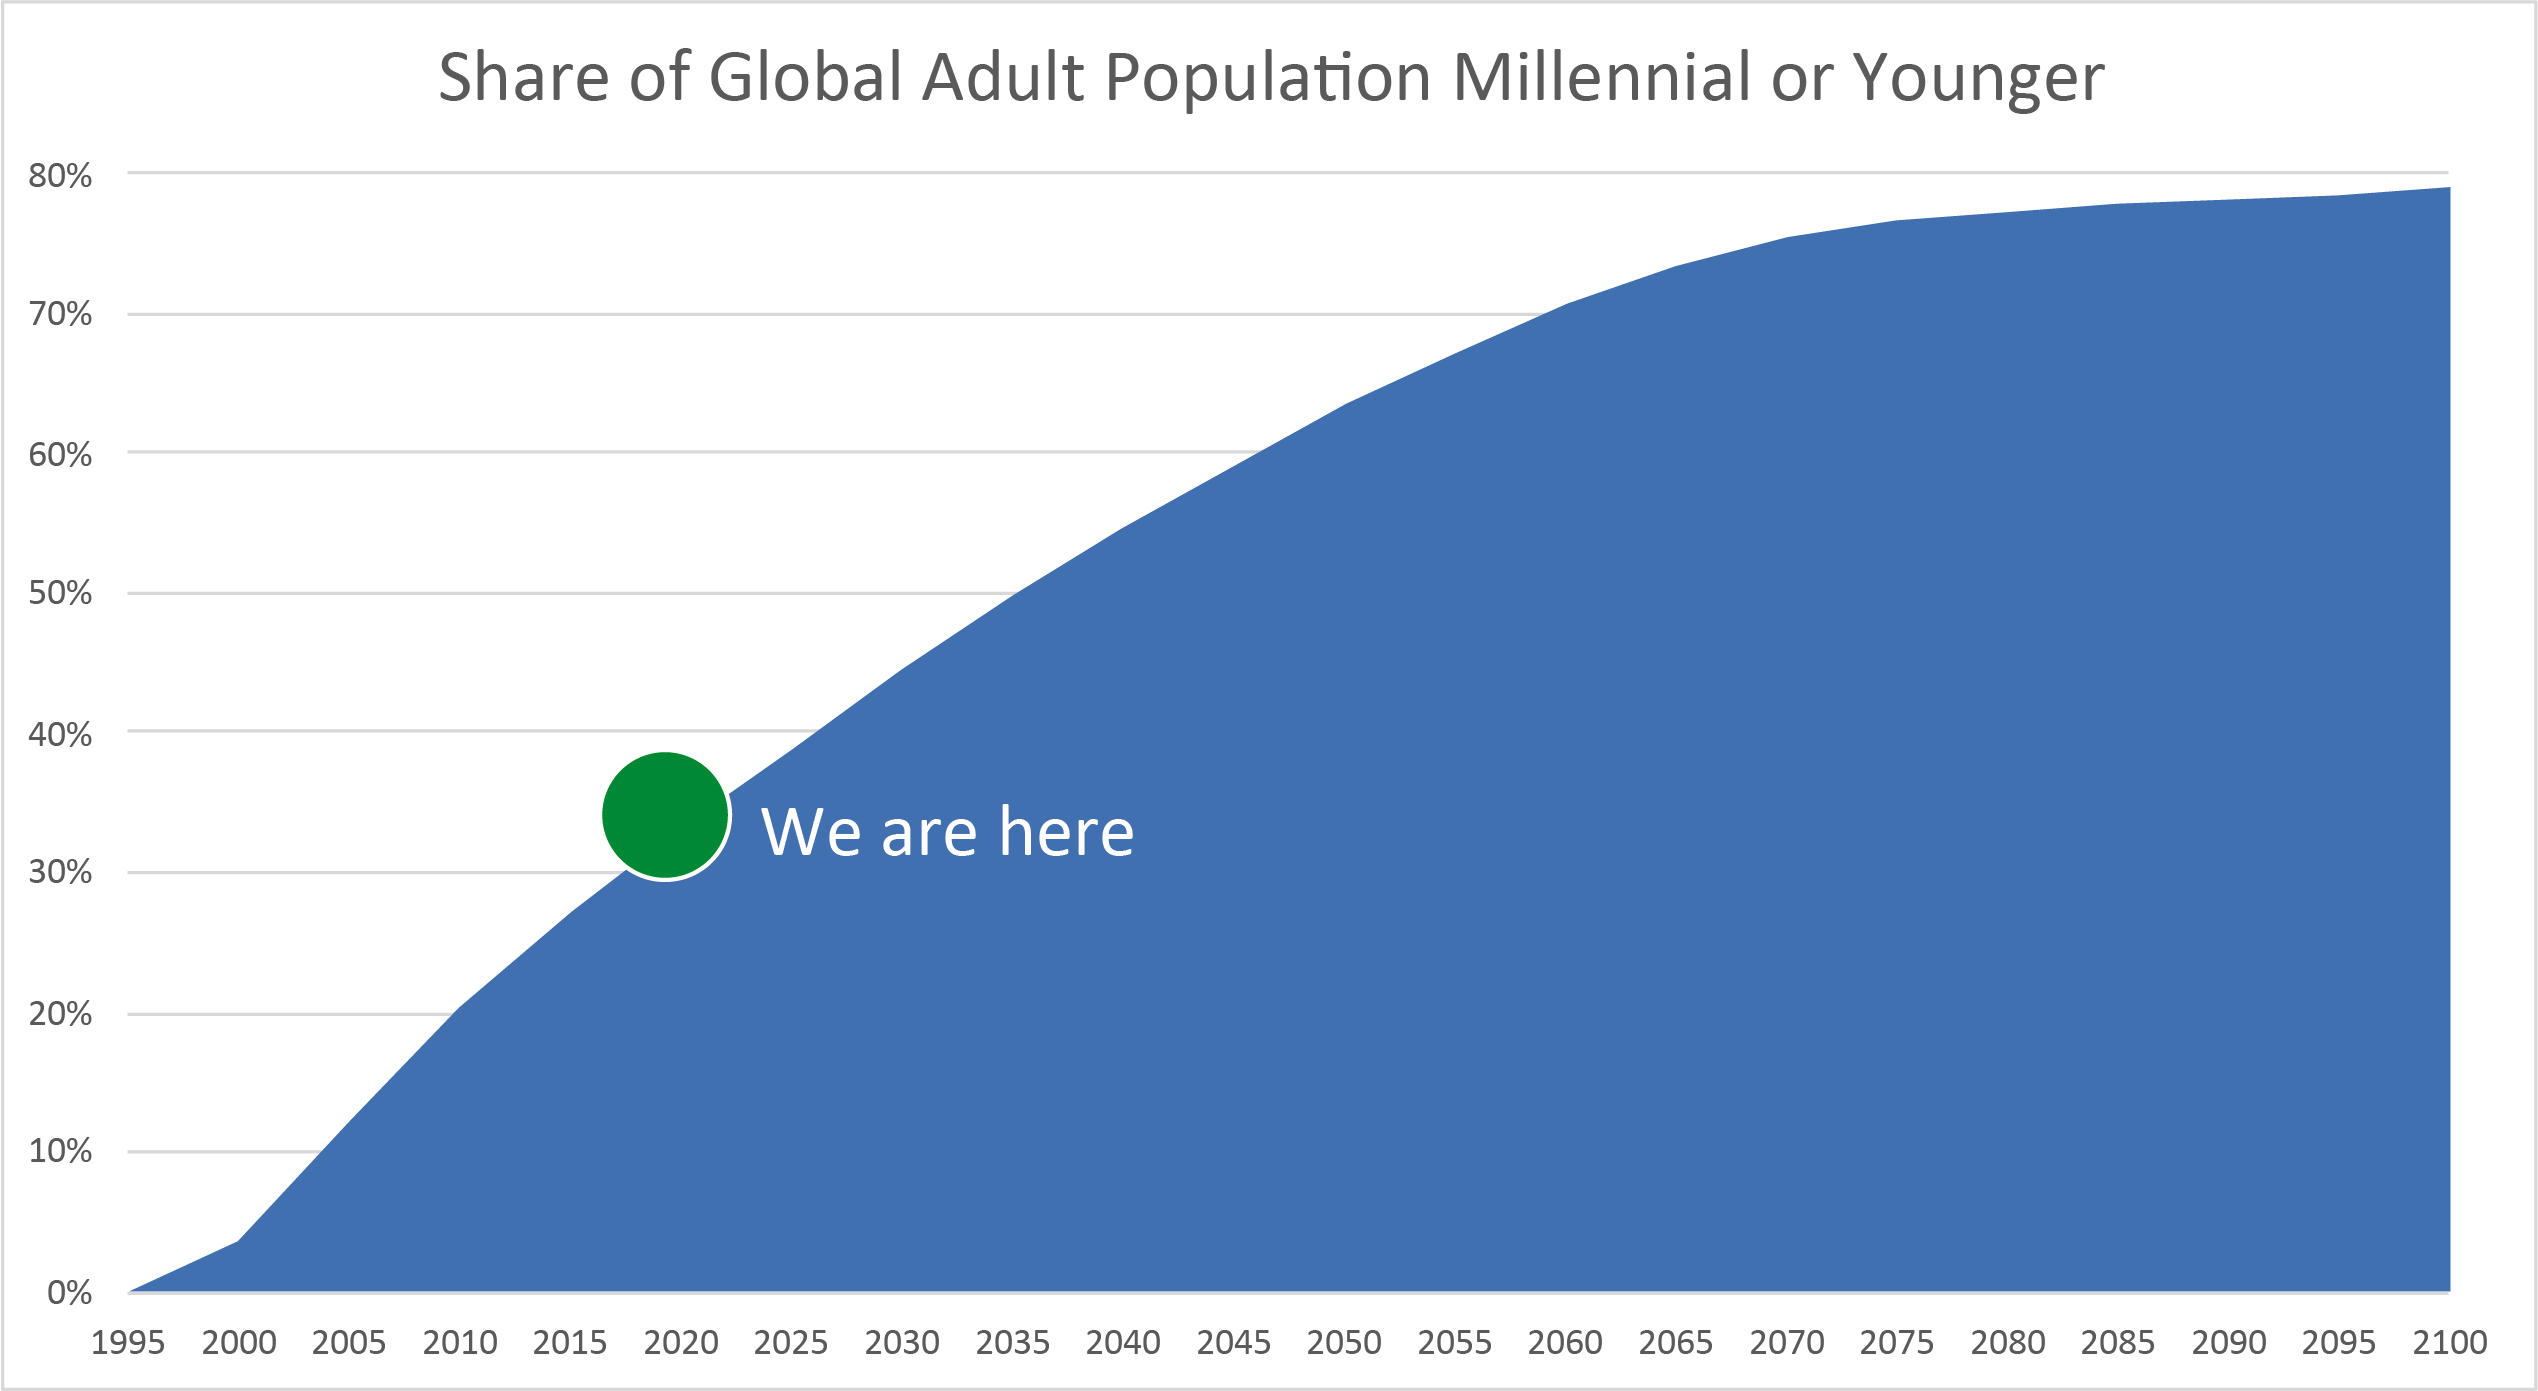 Source: UN Department of Economic and Social Affairs Population Dynamics